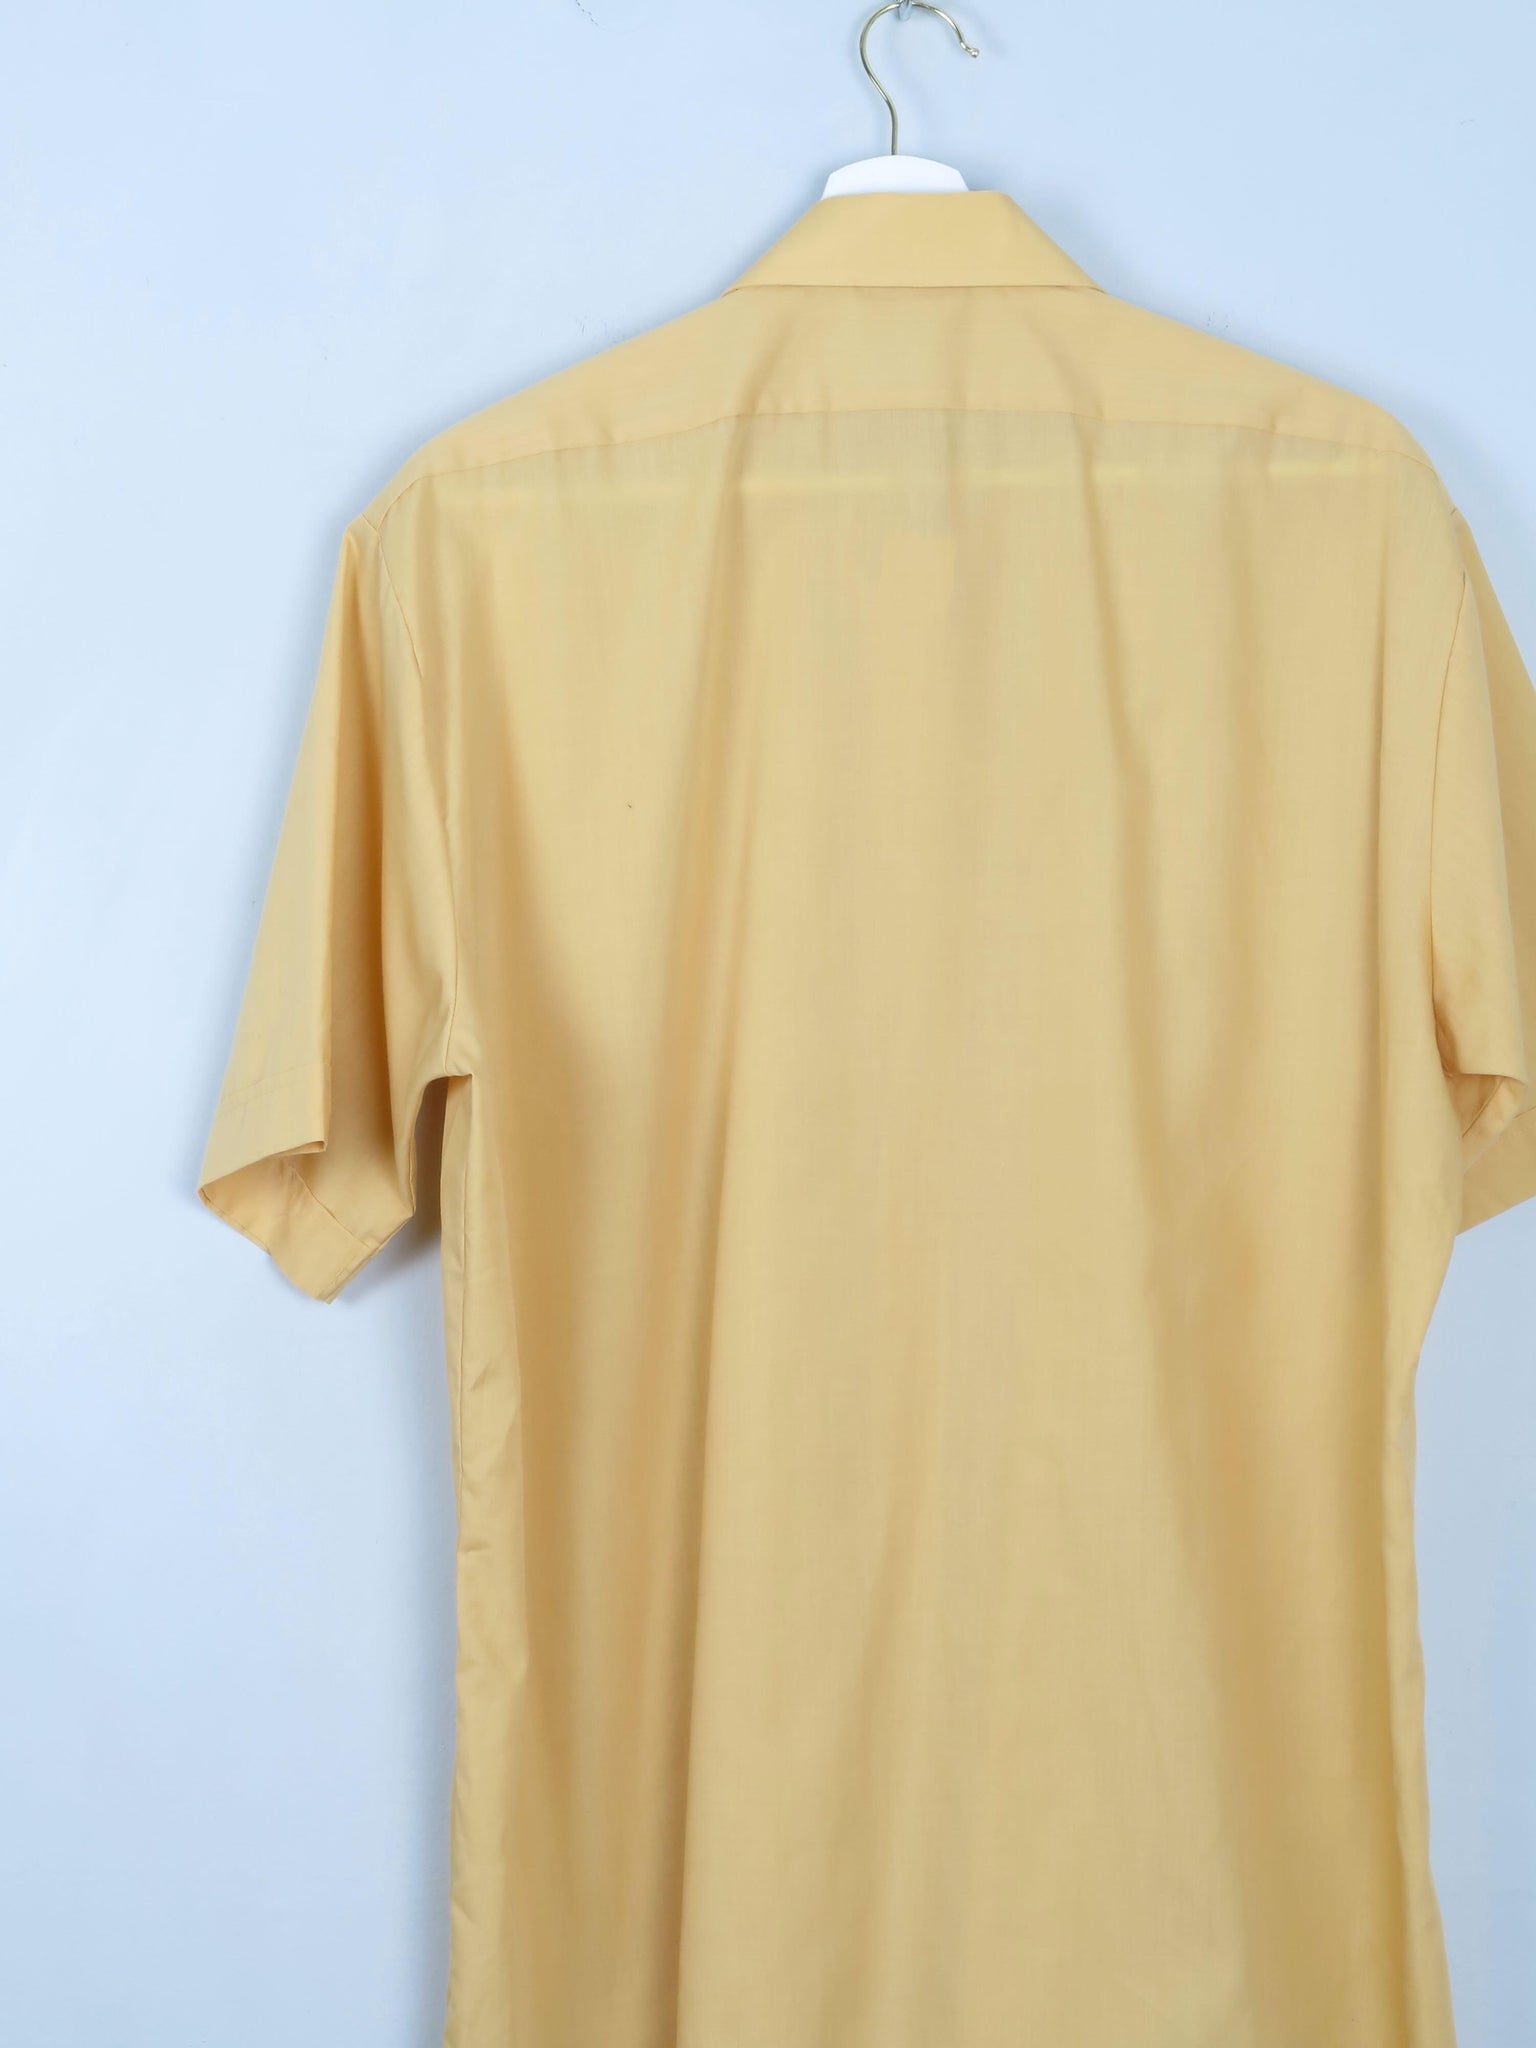 Men's Vintage Yellow Shirt XL - The Harlequin